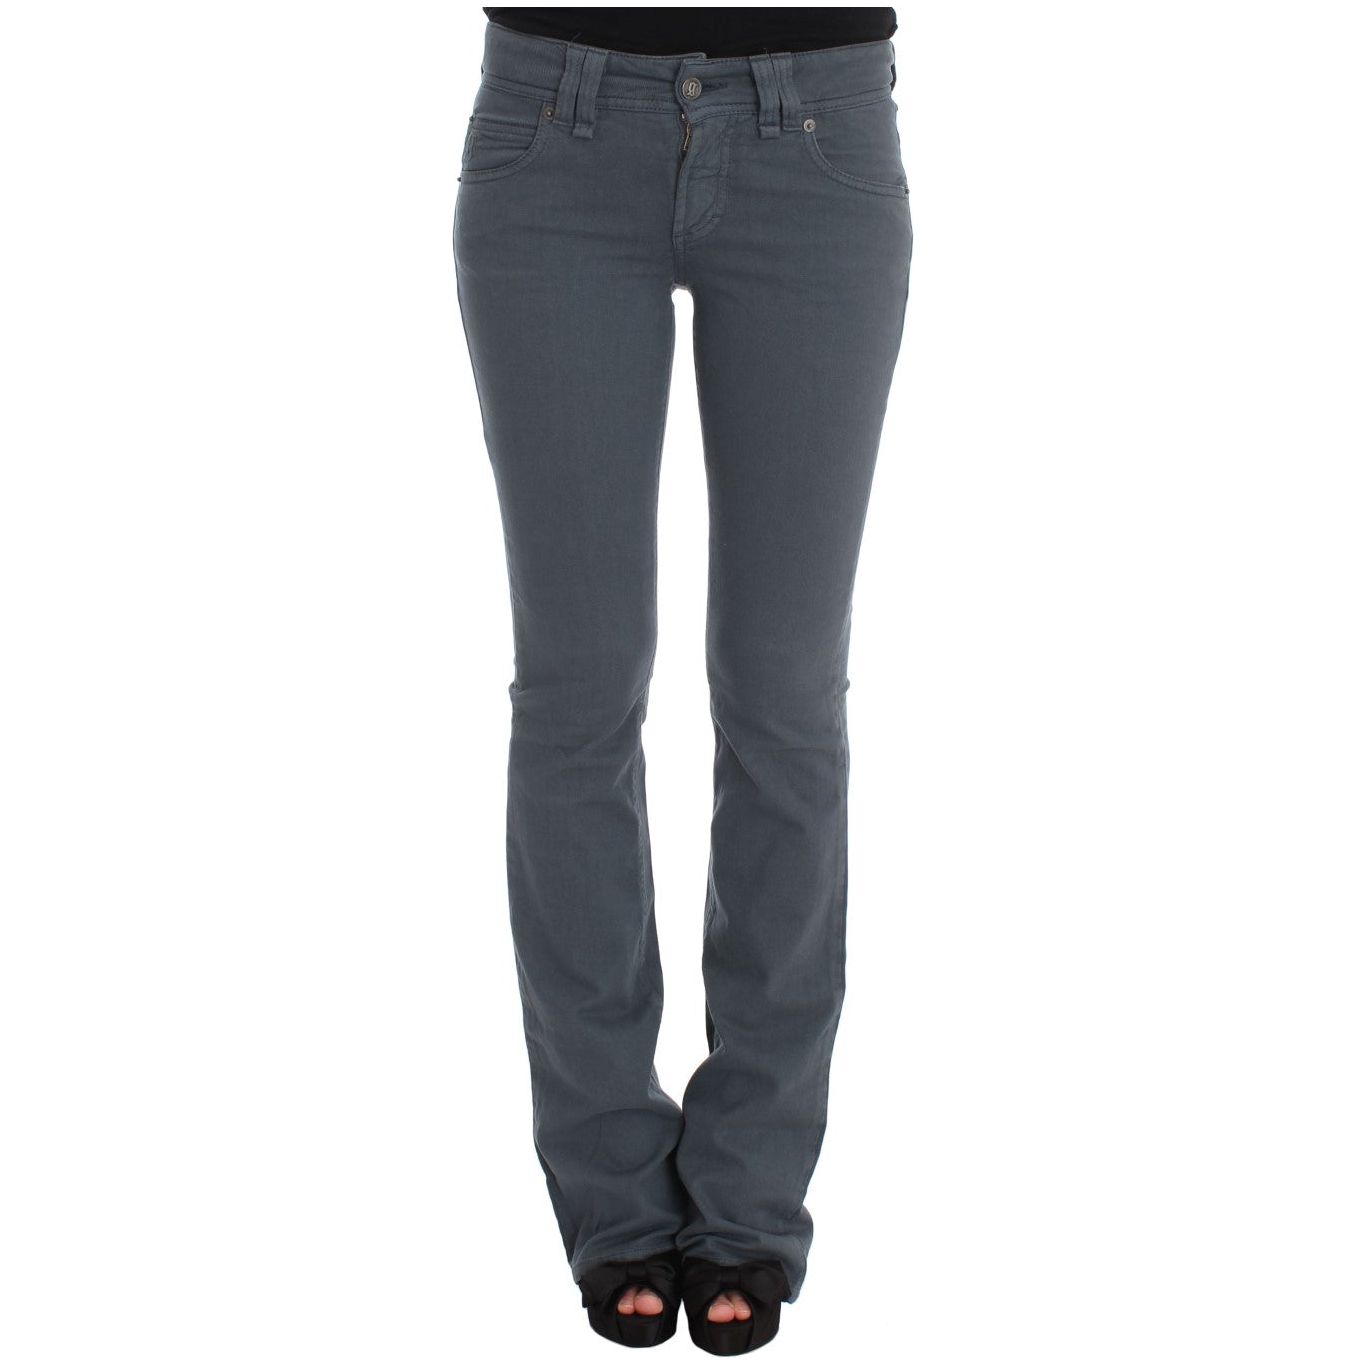 John Galliano Elegant Slim Fit Bootcut Jeans blue-cotton-blend-slim-fit-bootcut-jeans-2 Jeans & Pants 330188-blue-cotton-blend-slim-fit-bootcut-jeans-3.jpg